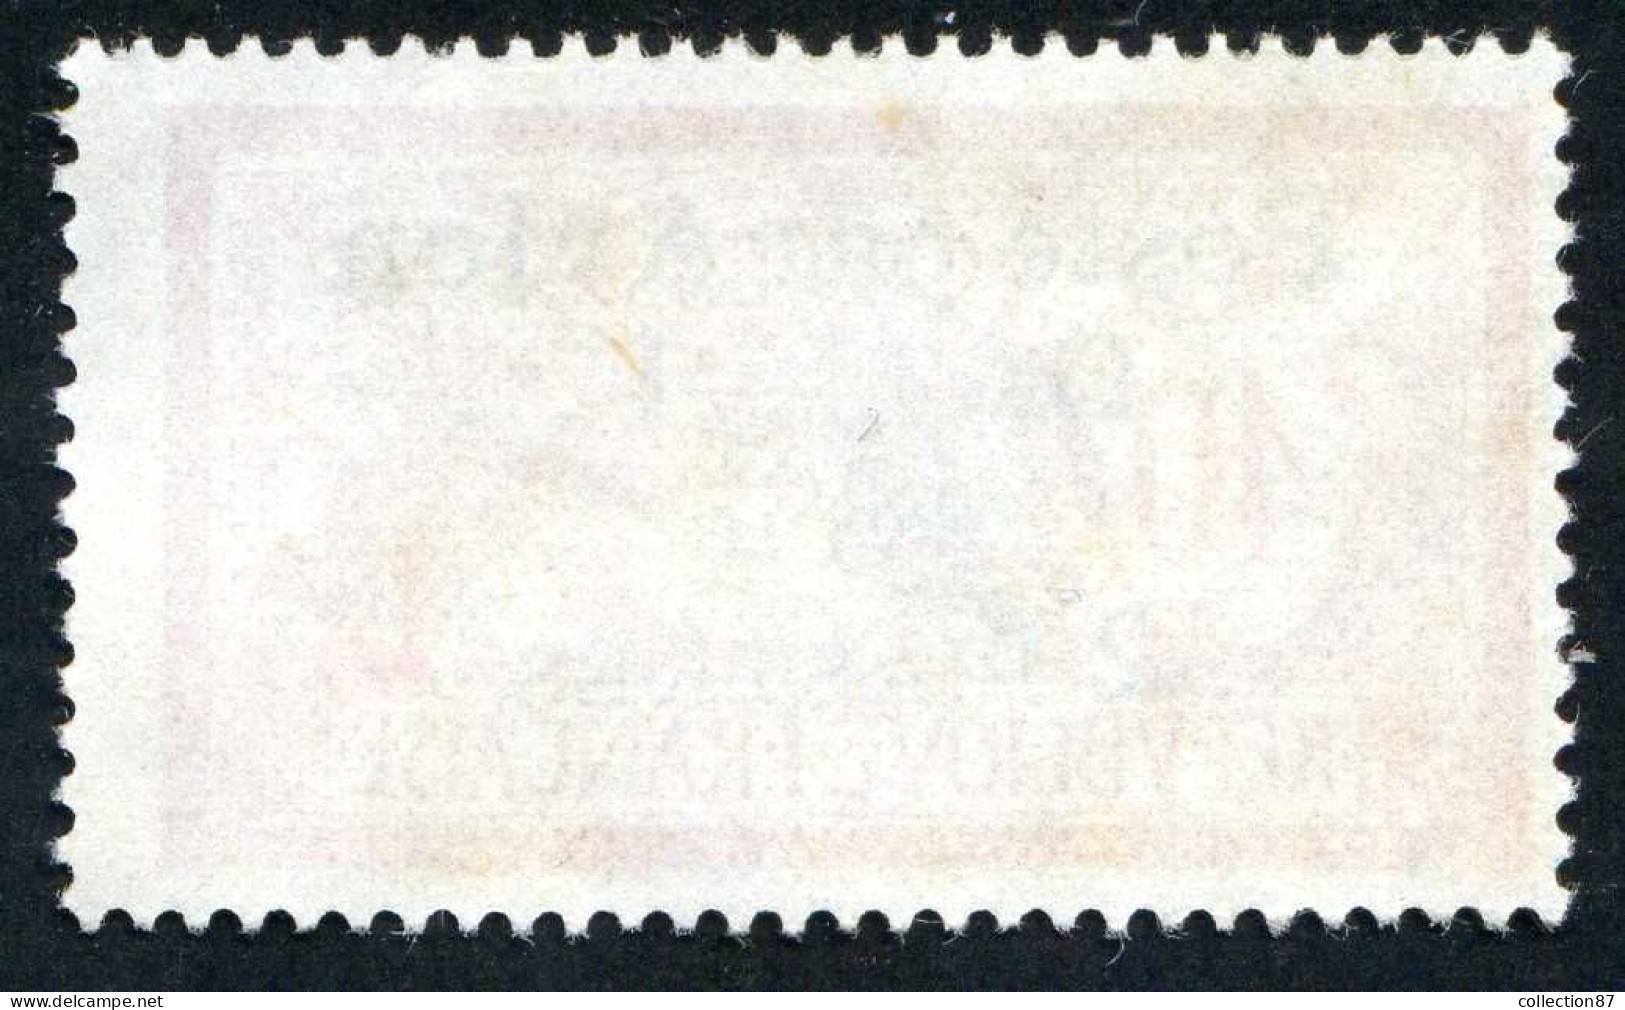 REF 086 > SYRIE < PA N° 10 > Ø < Oblitéré < Ø Used > Poste Aérienne - Aéro - Air Mail - Airmail